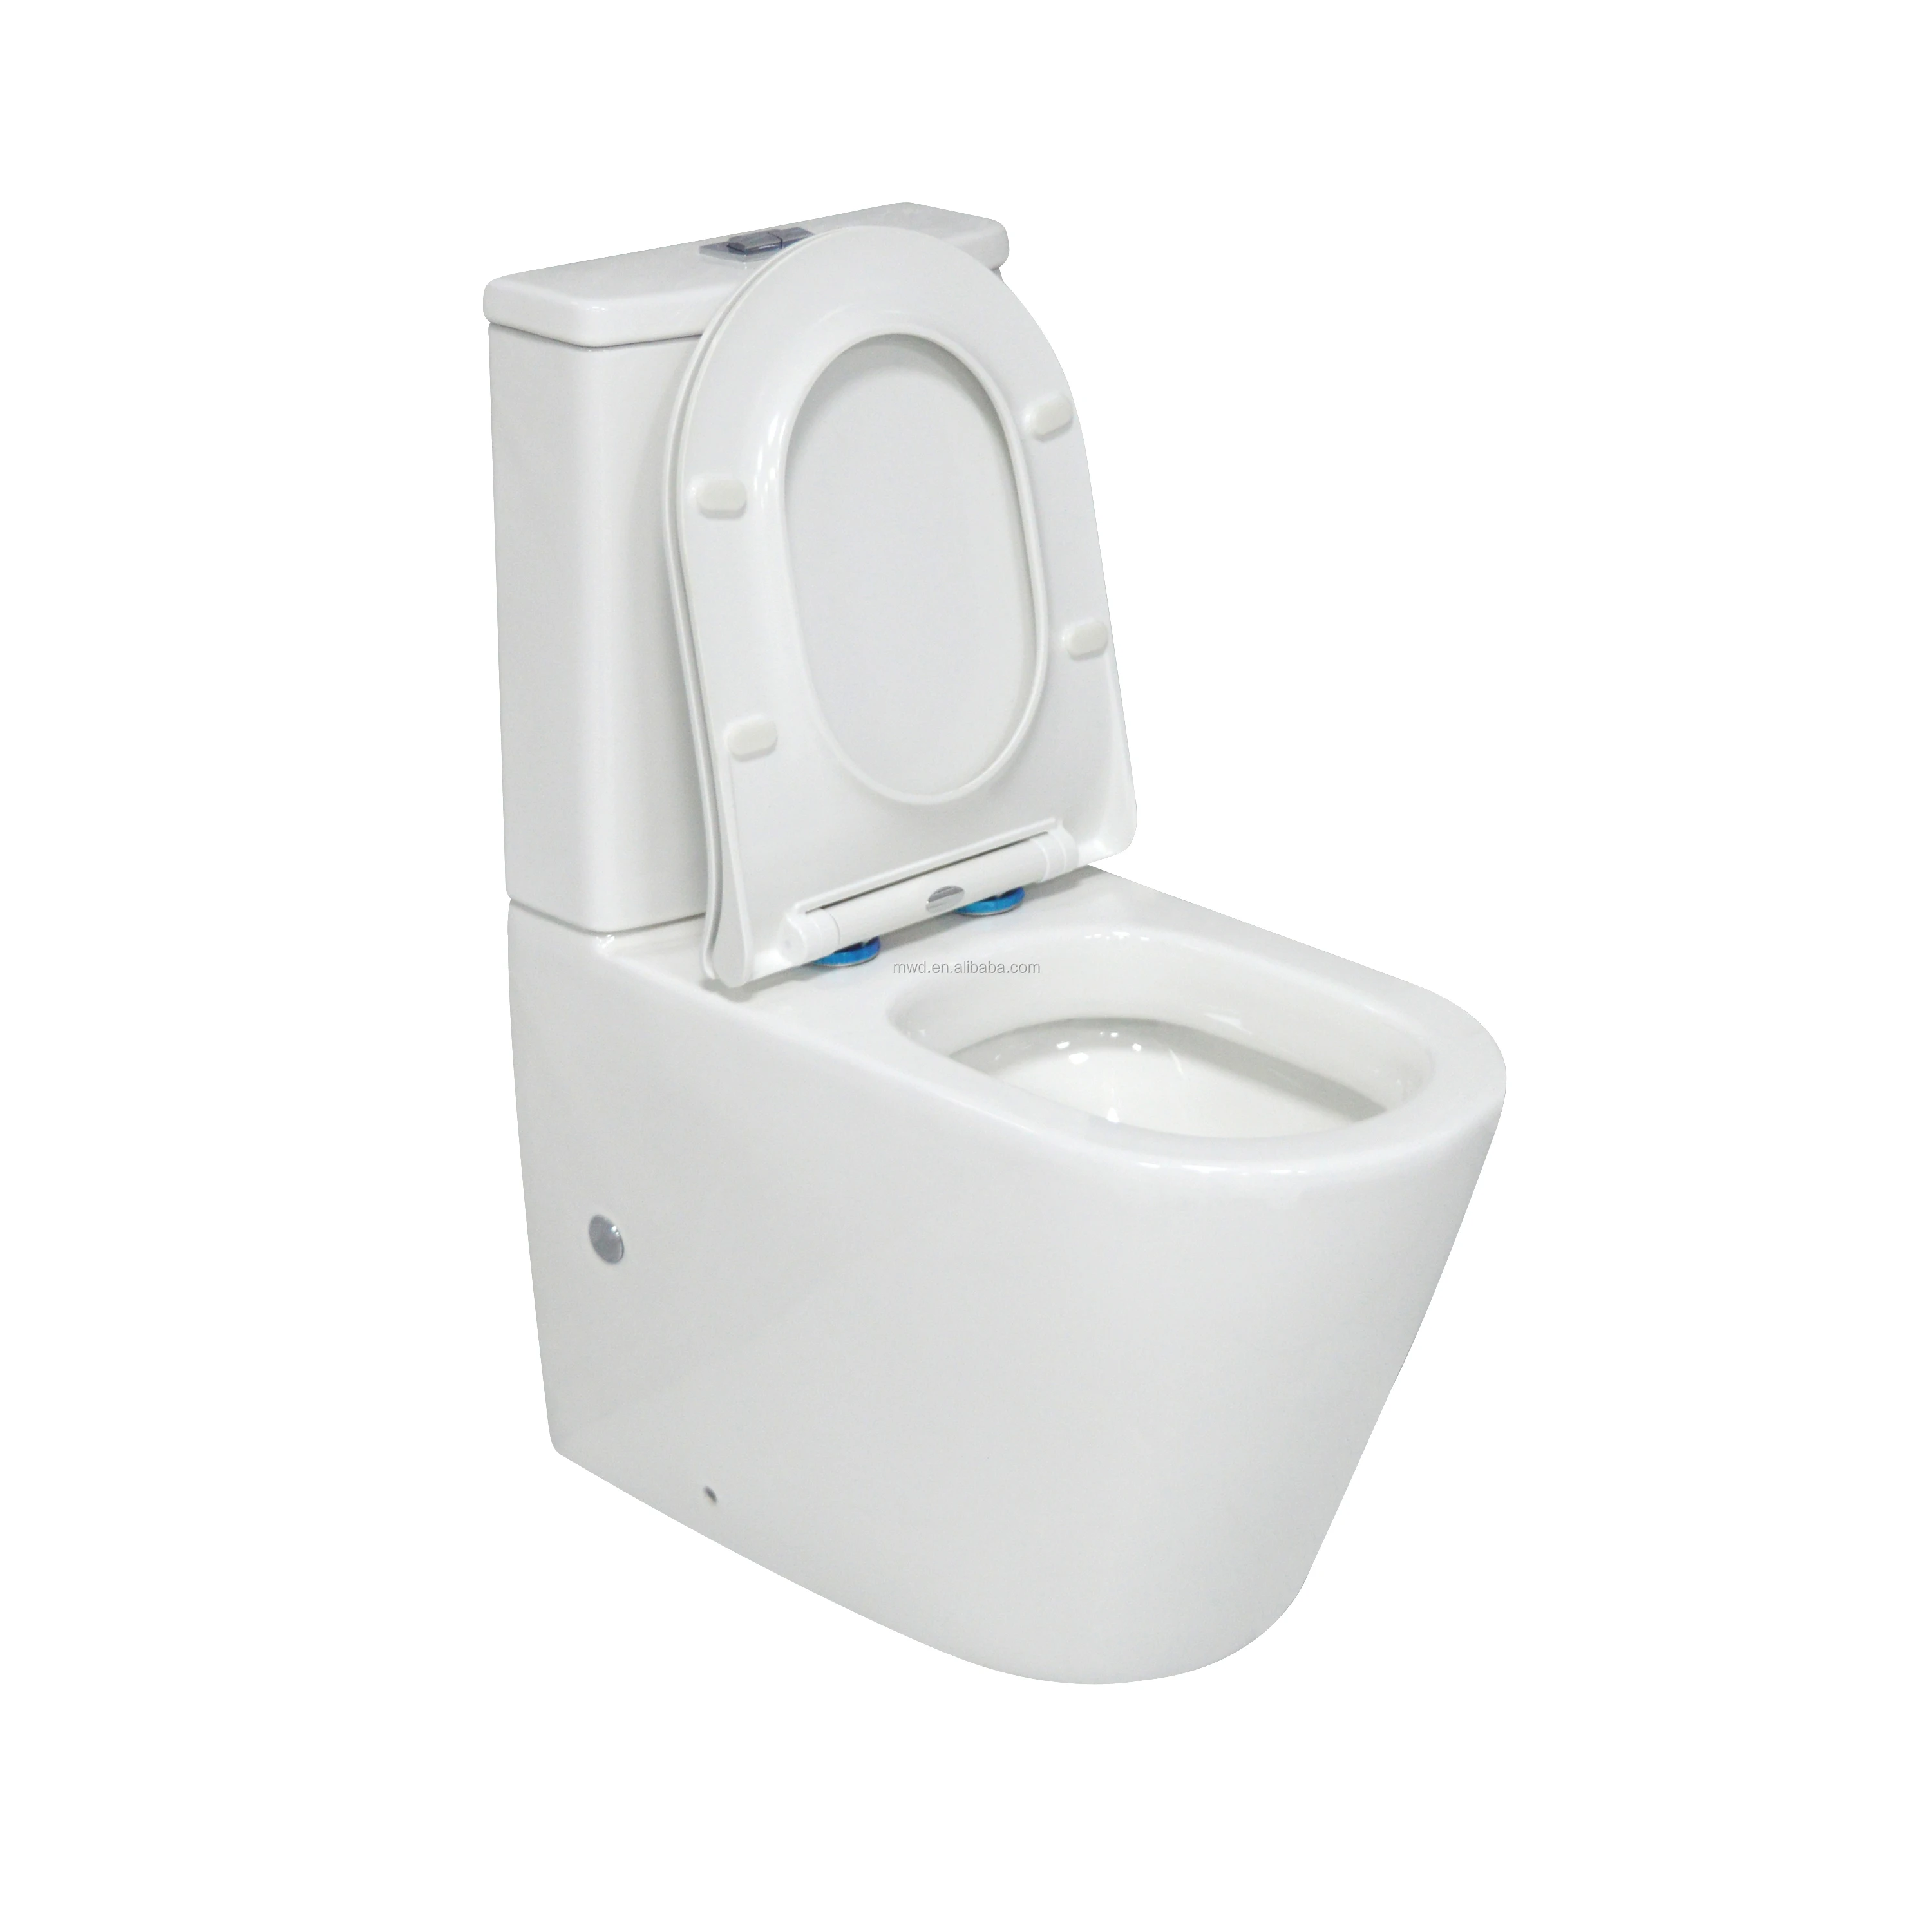 Hot sale cheap price bathroom ceramic two-piece portable toilet